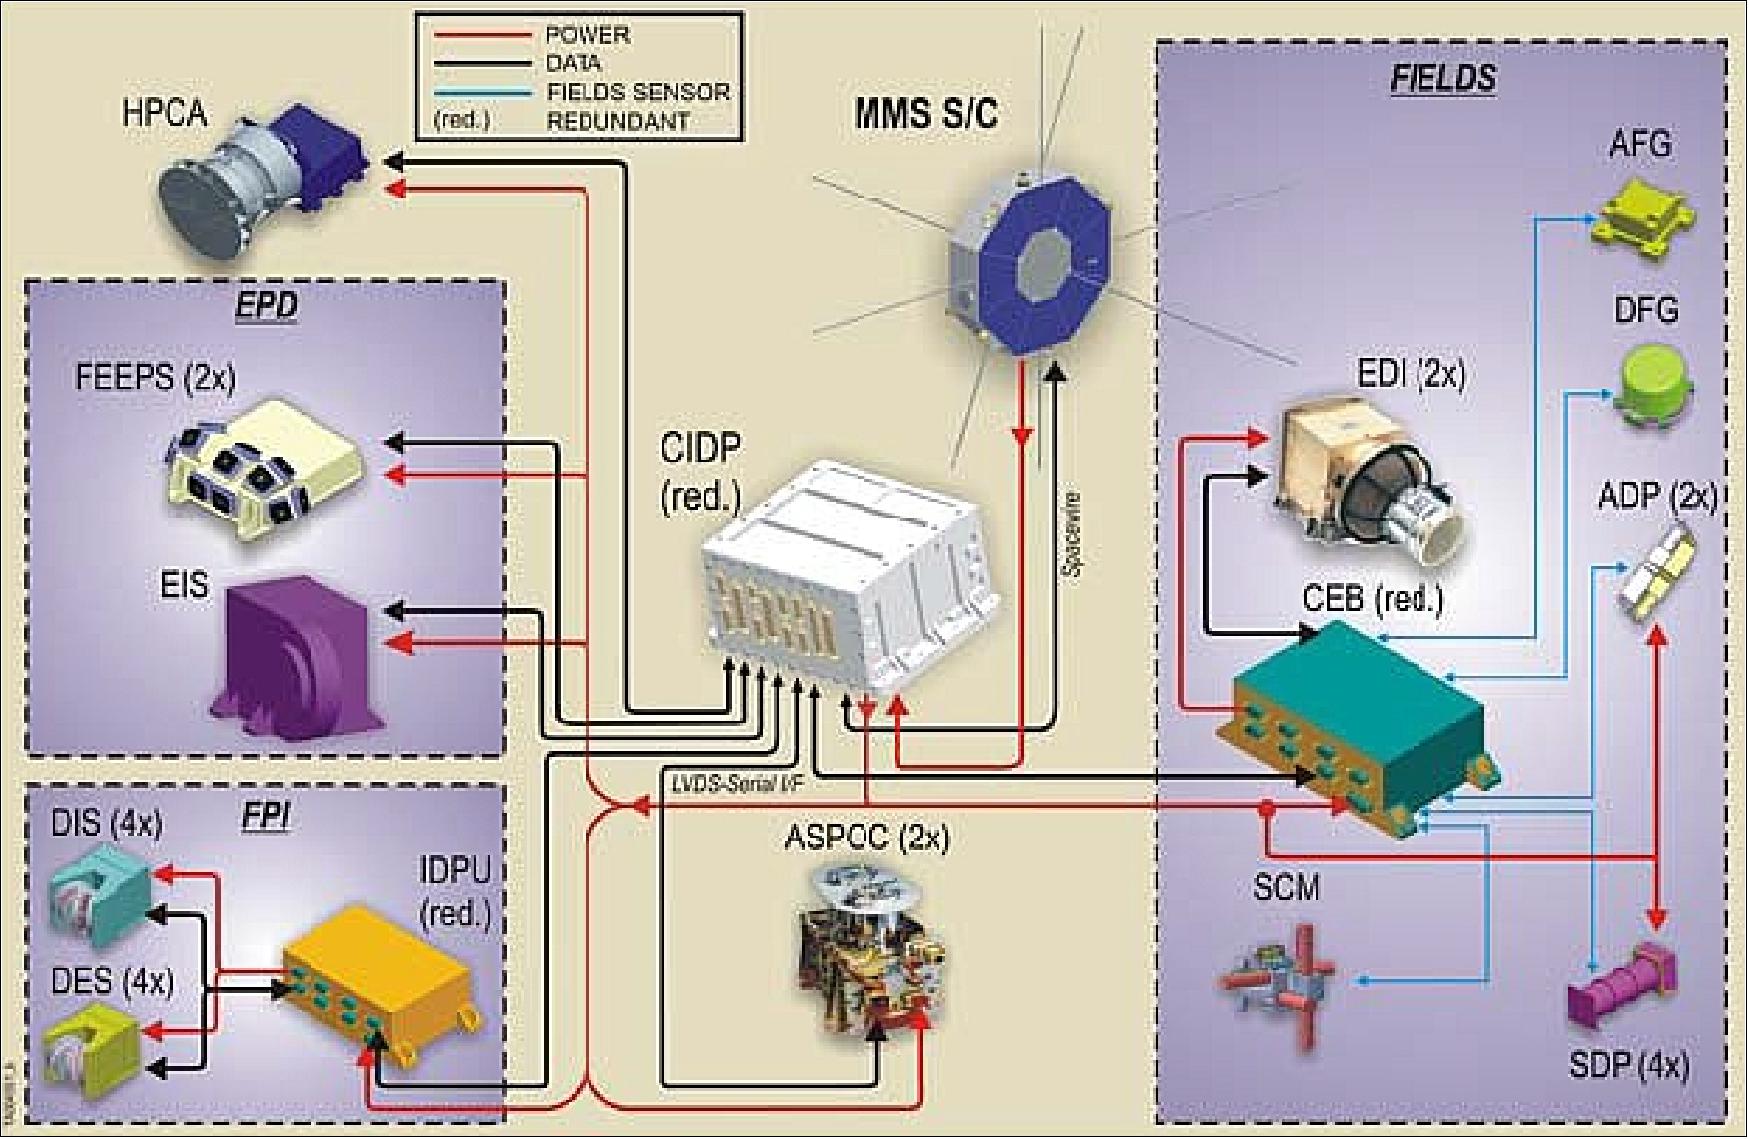 Figure 47: MMS SMART instrument suite architecture (image credit: SwRI)